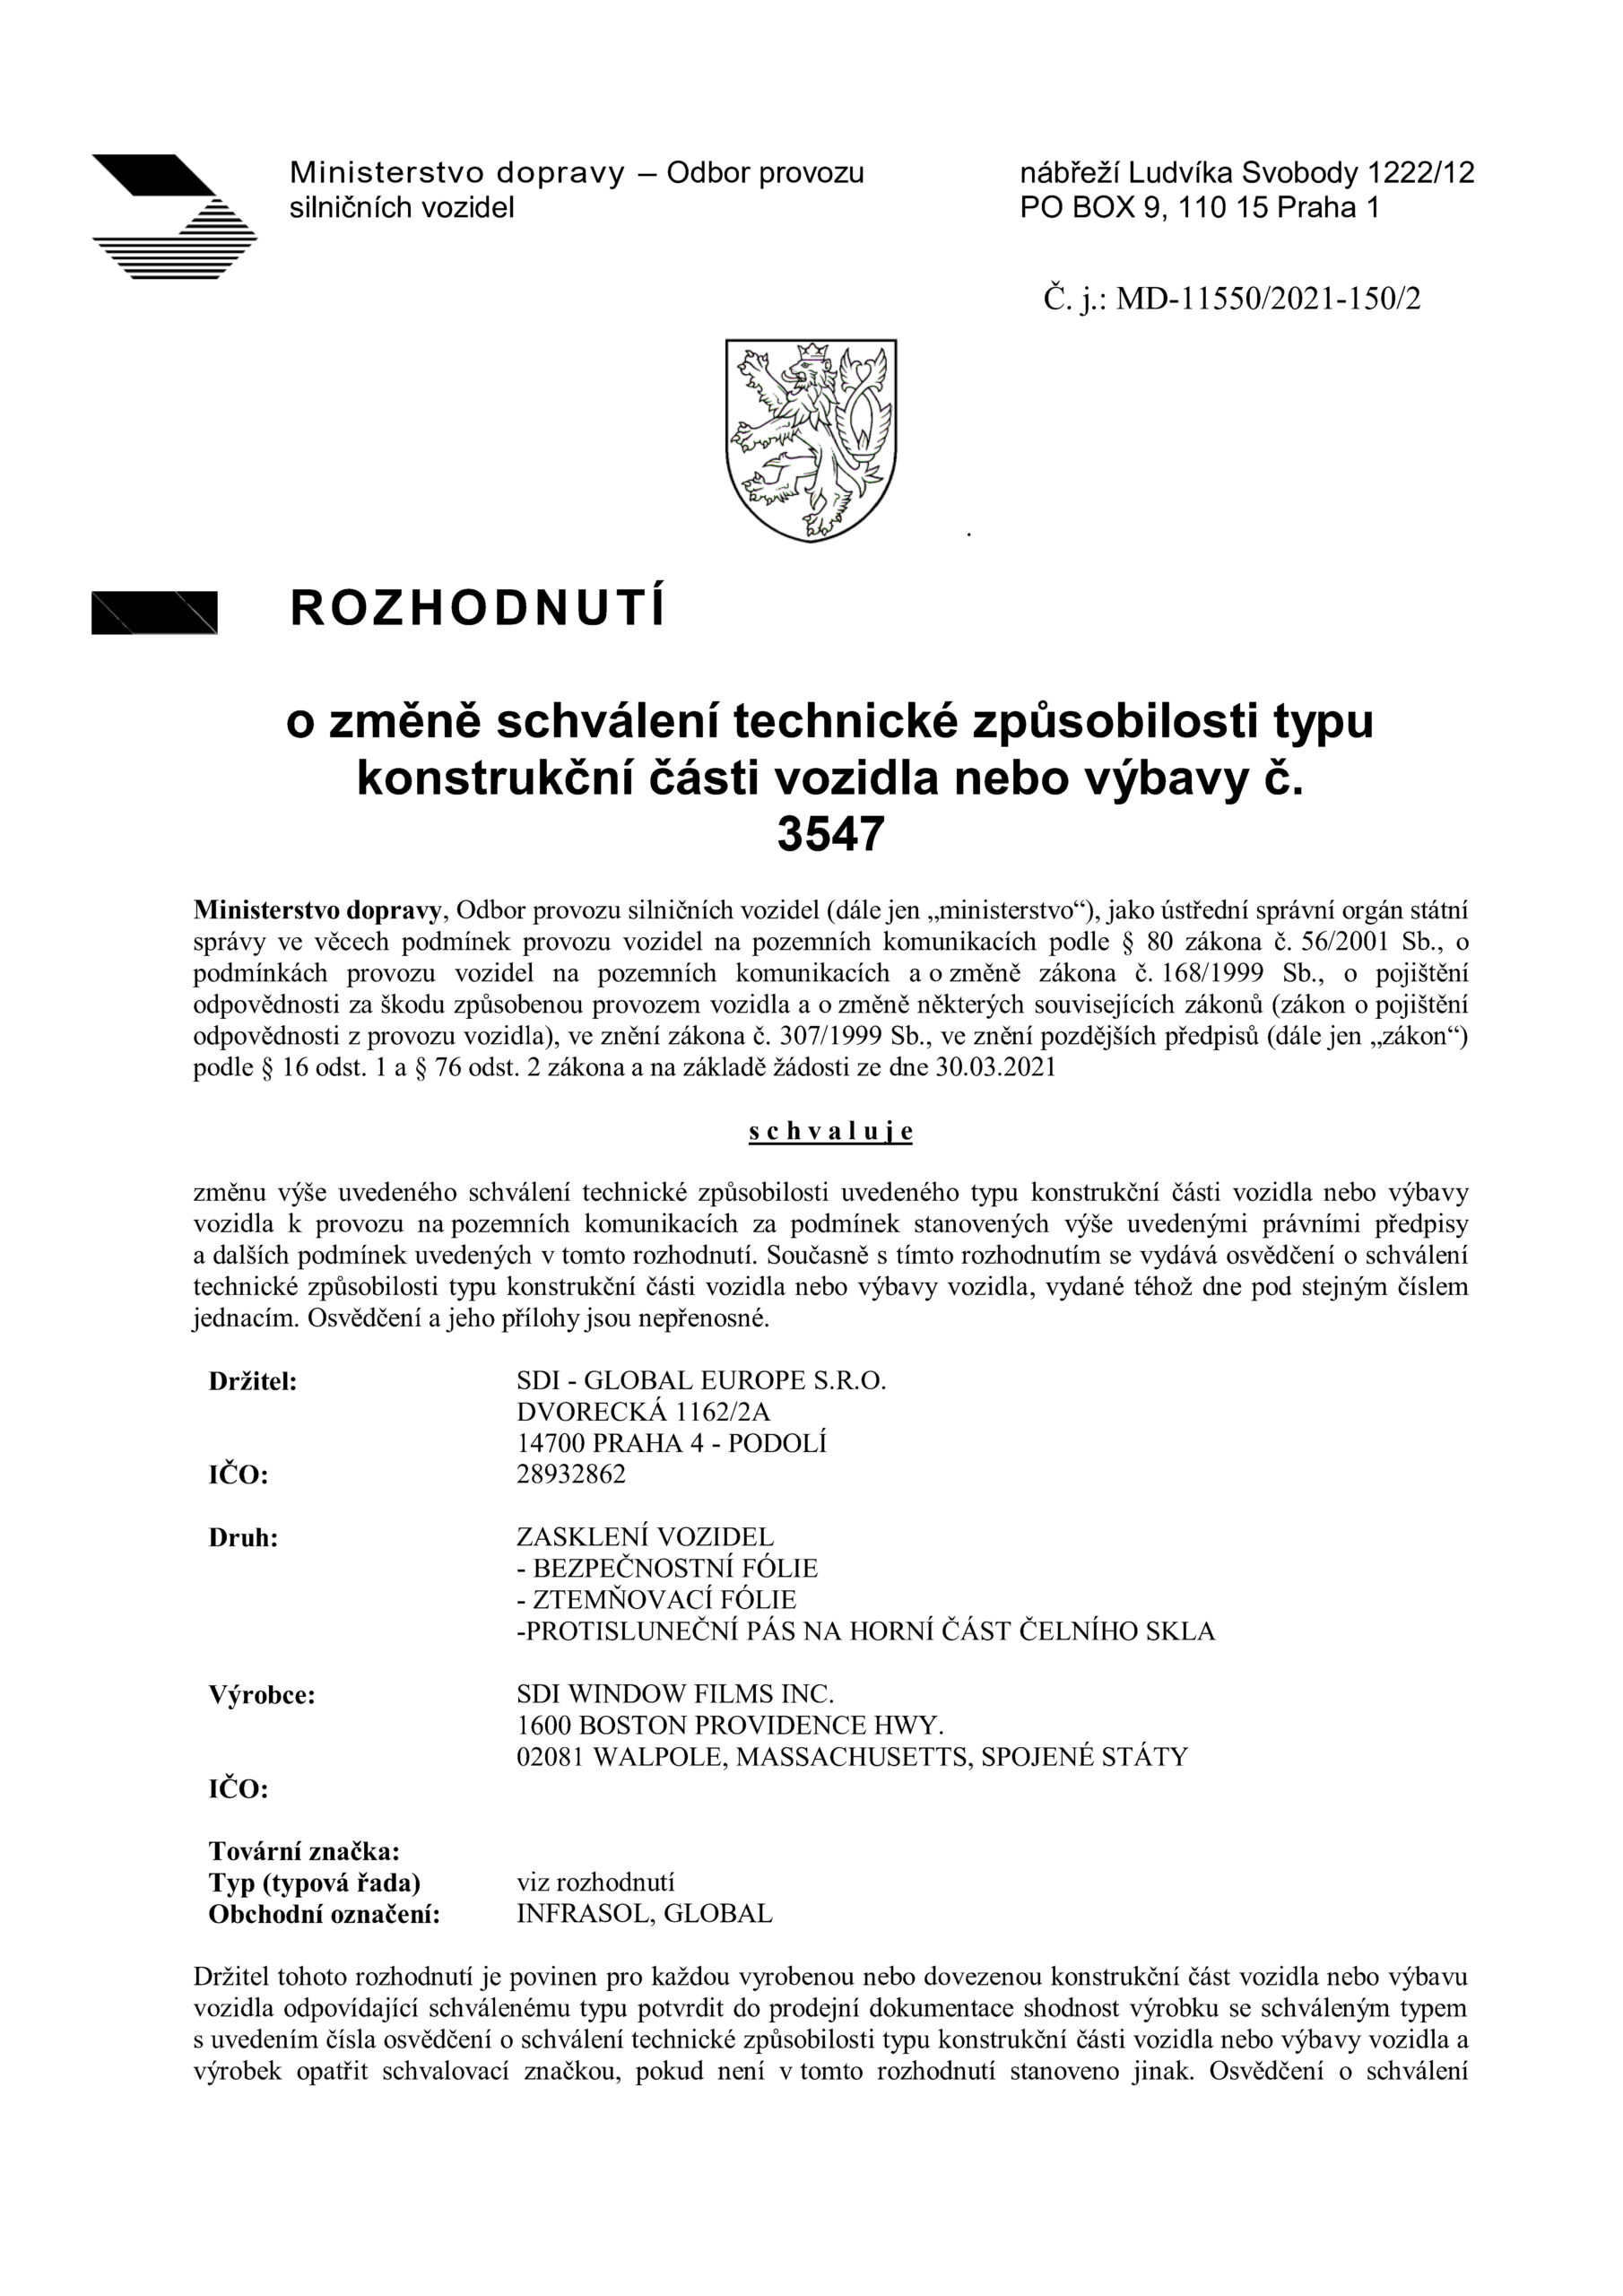 Infrasol Homologace z MDČR Strana-01/04